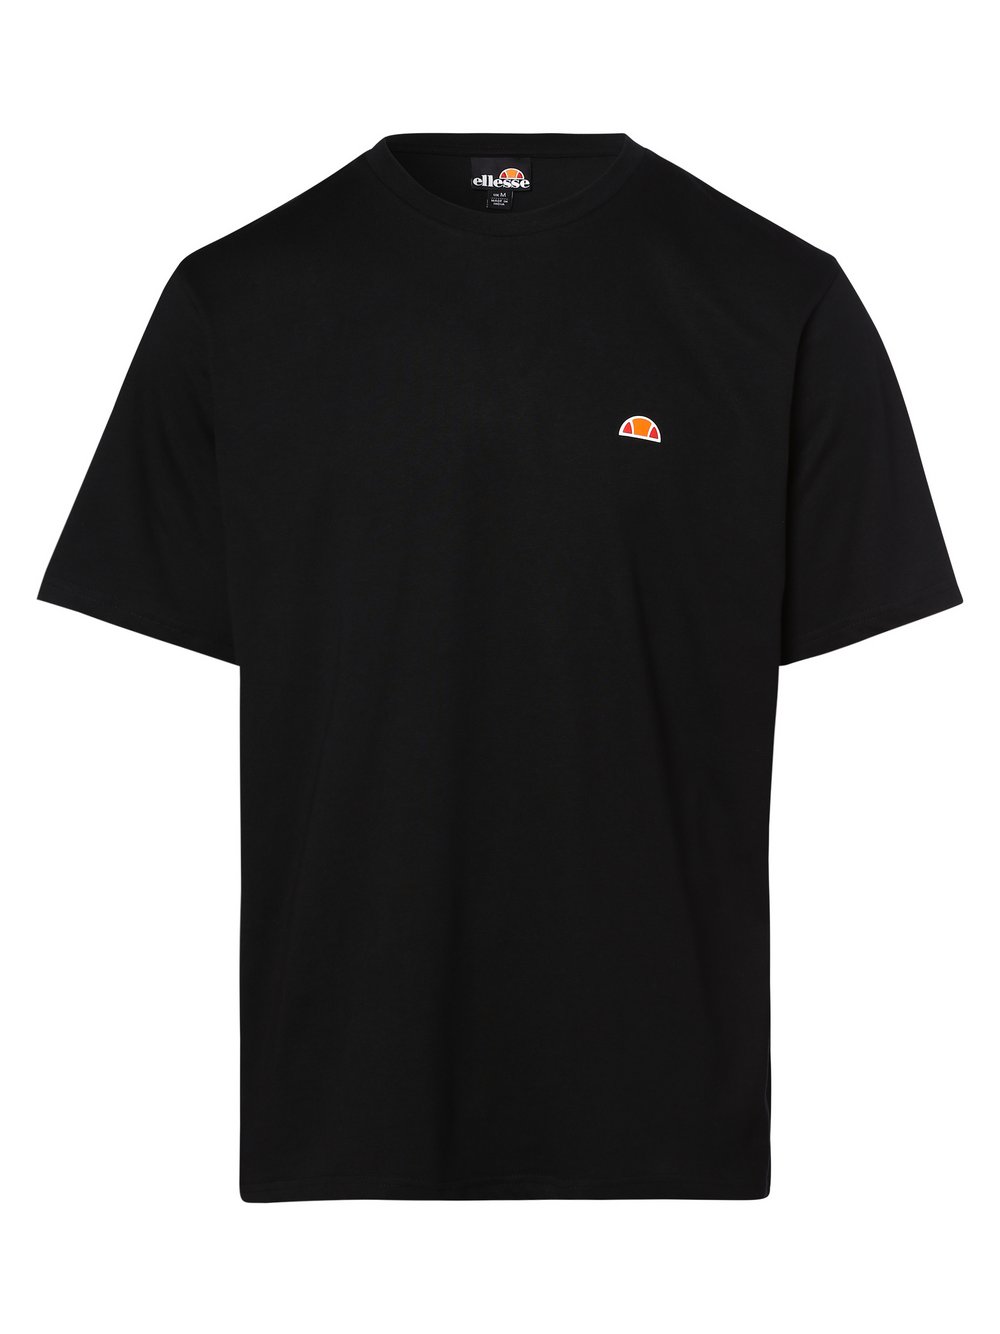 ellesse - T-shirt męski – Retanna, czarny